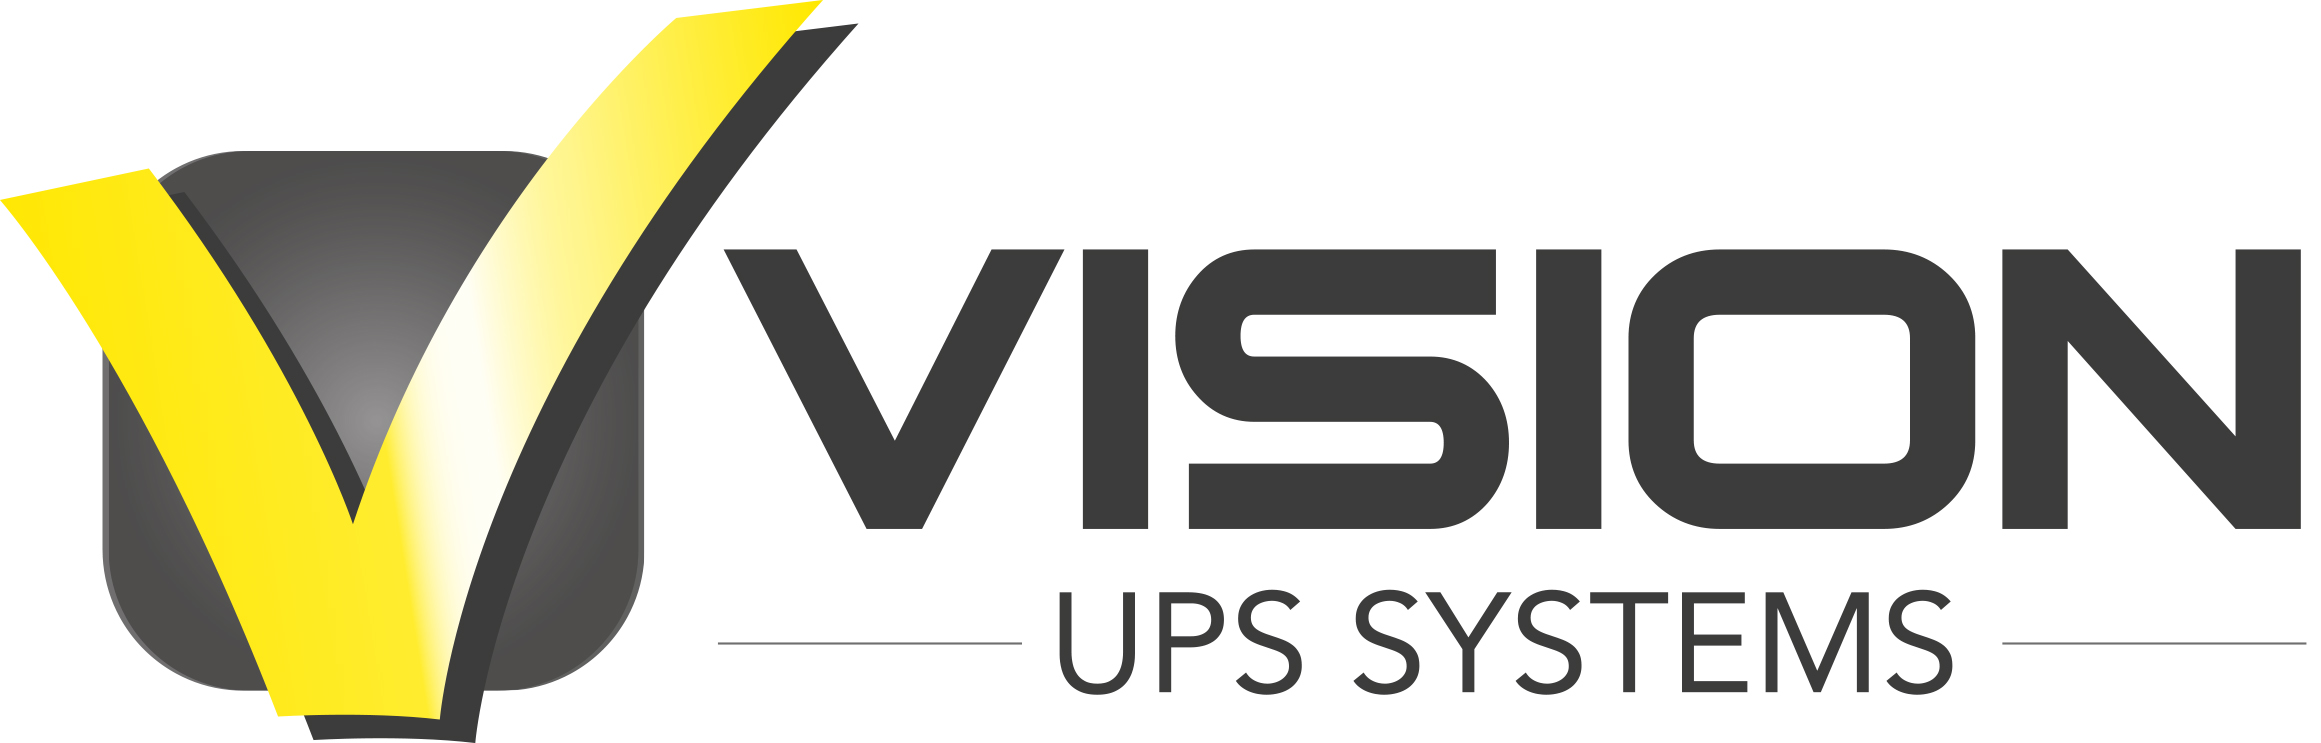 New logo UPS.jpg